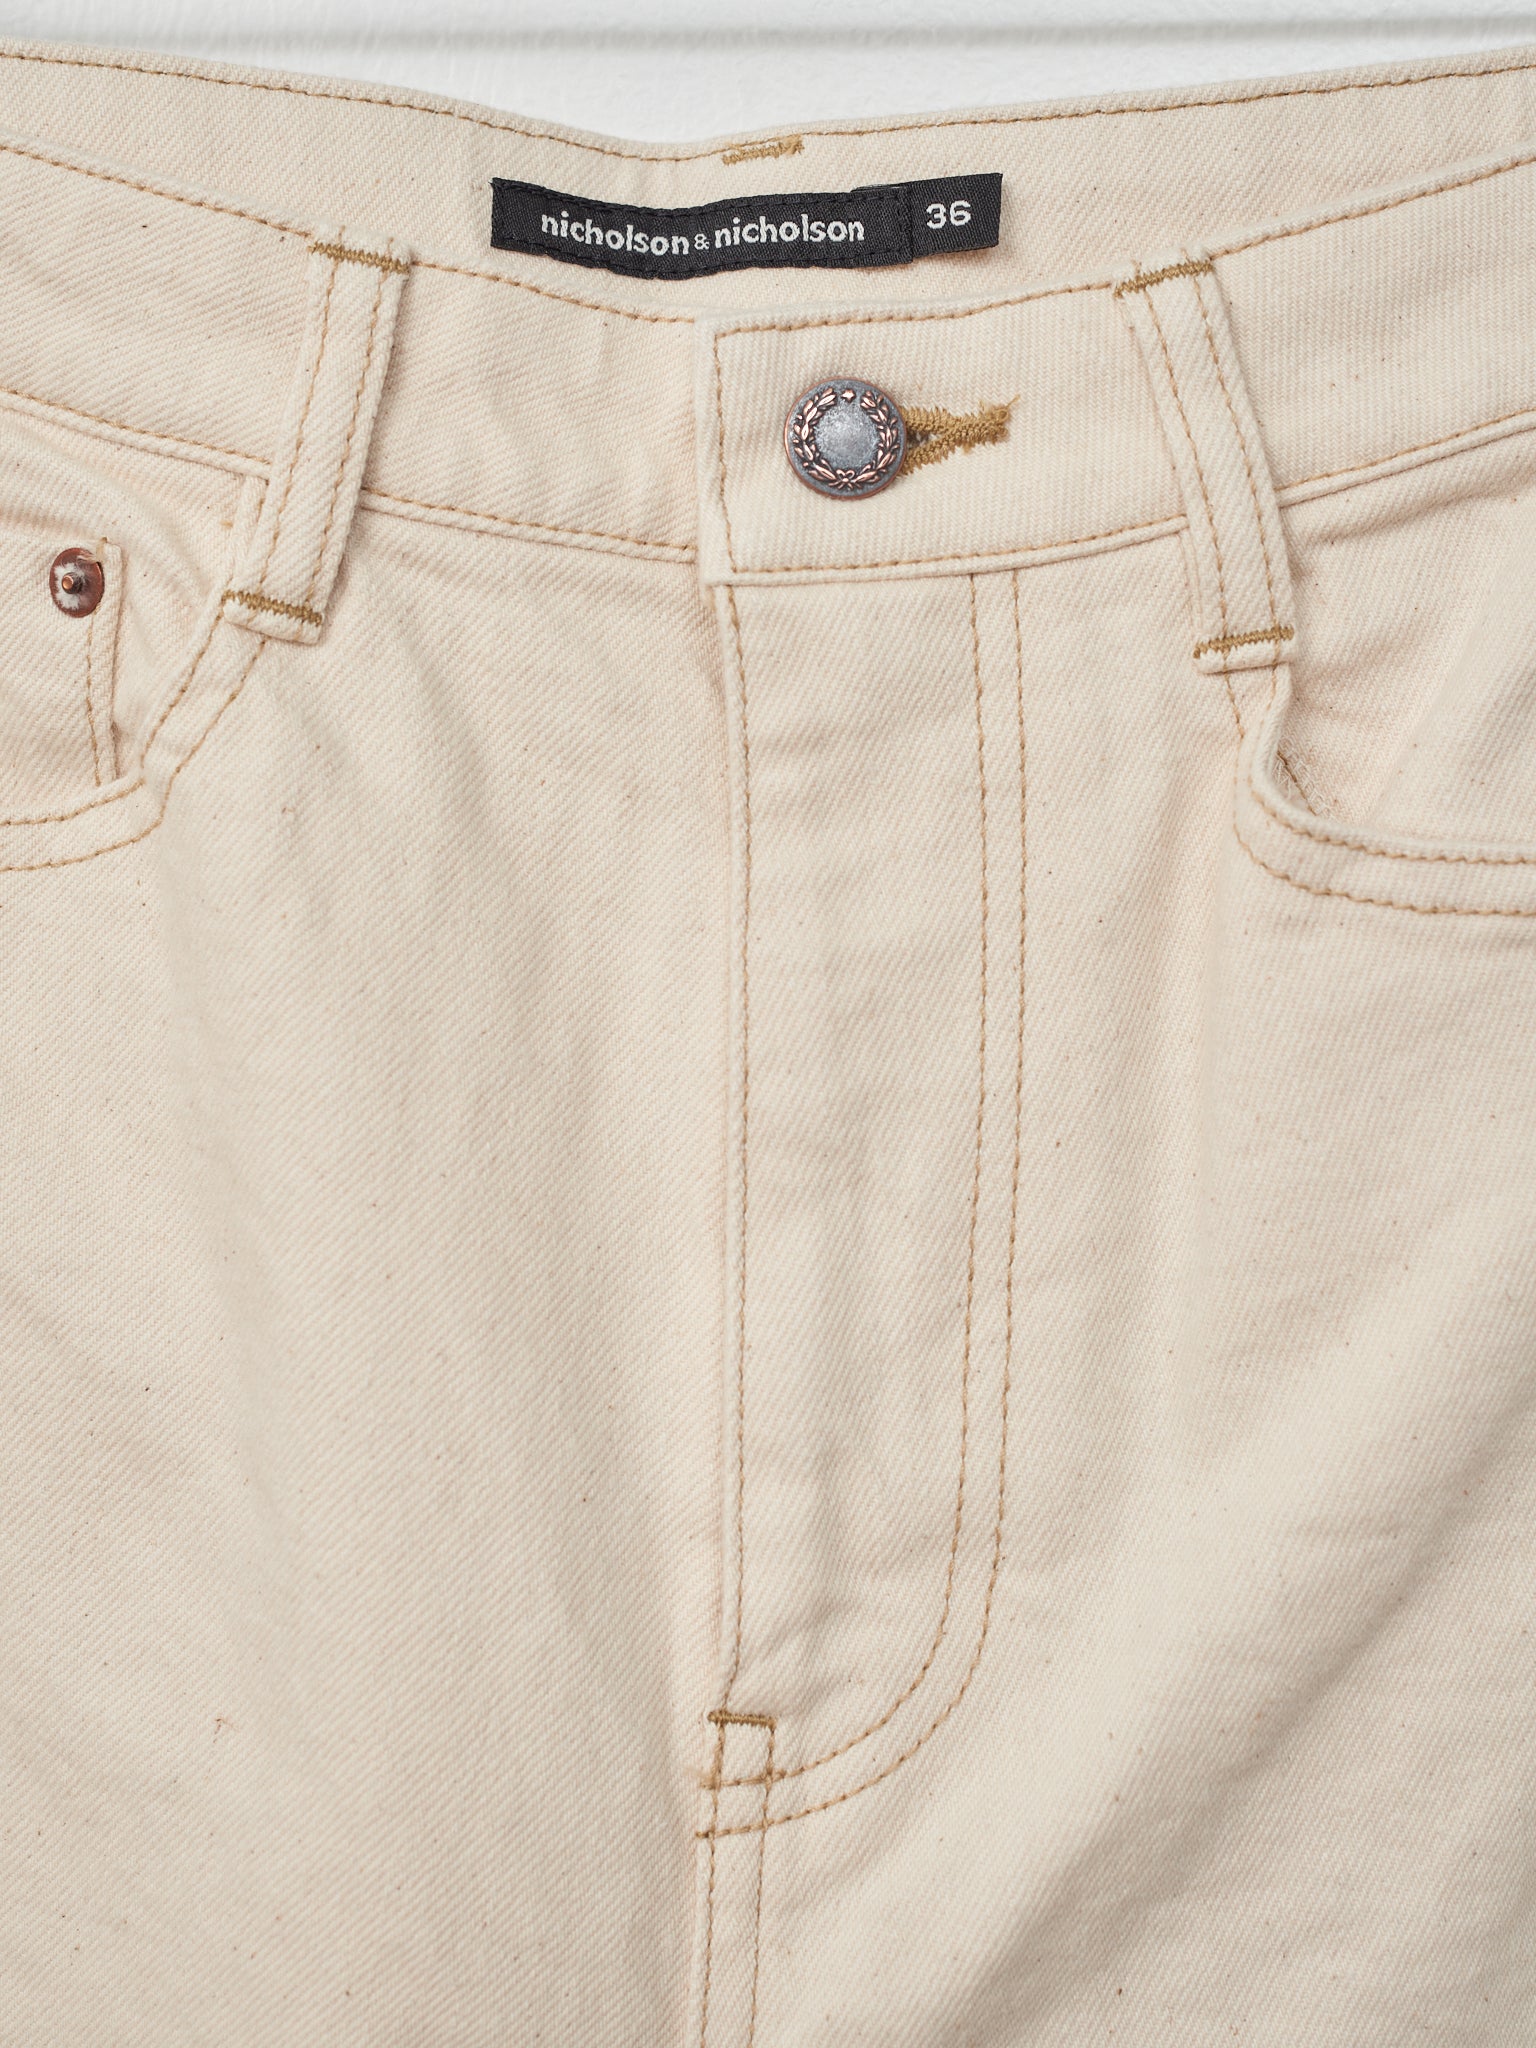 Namu Shop - Nicholson & Nicholson SOPHIA Jeans - Off White